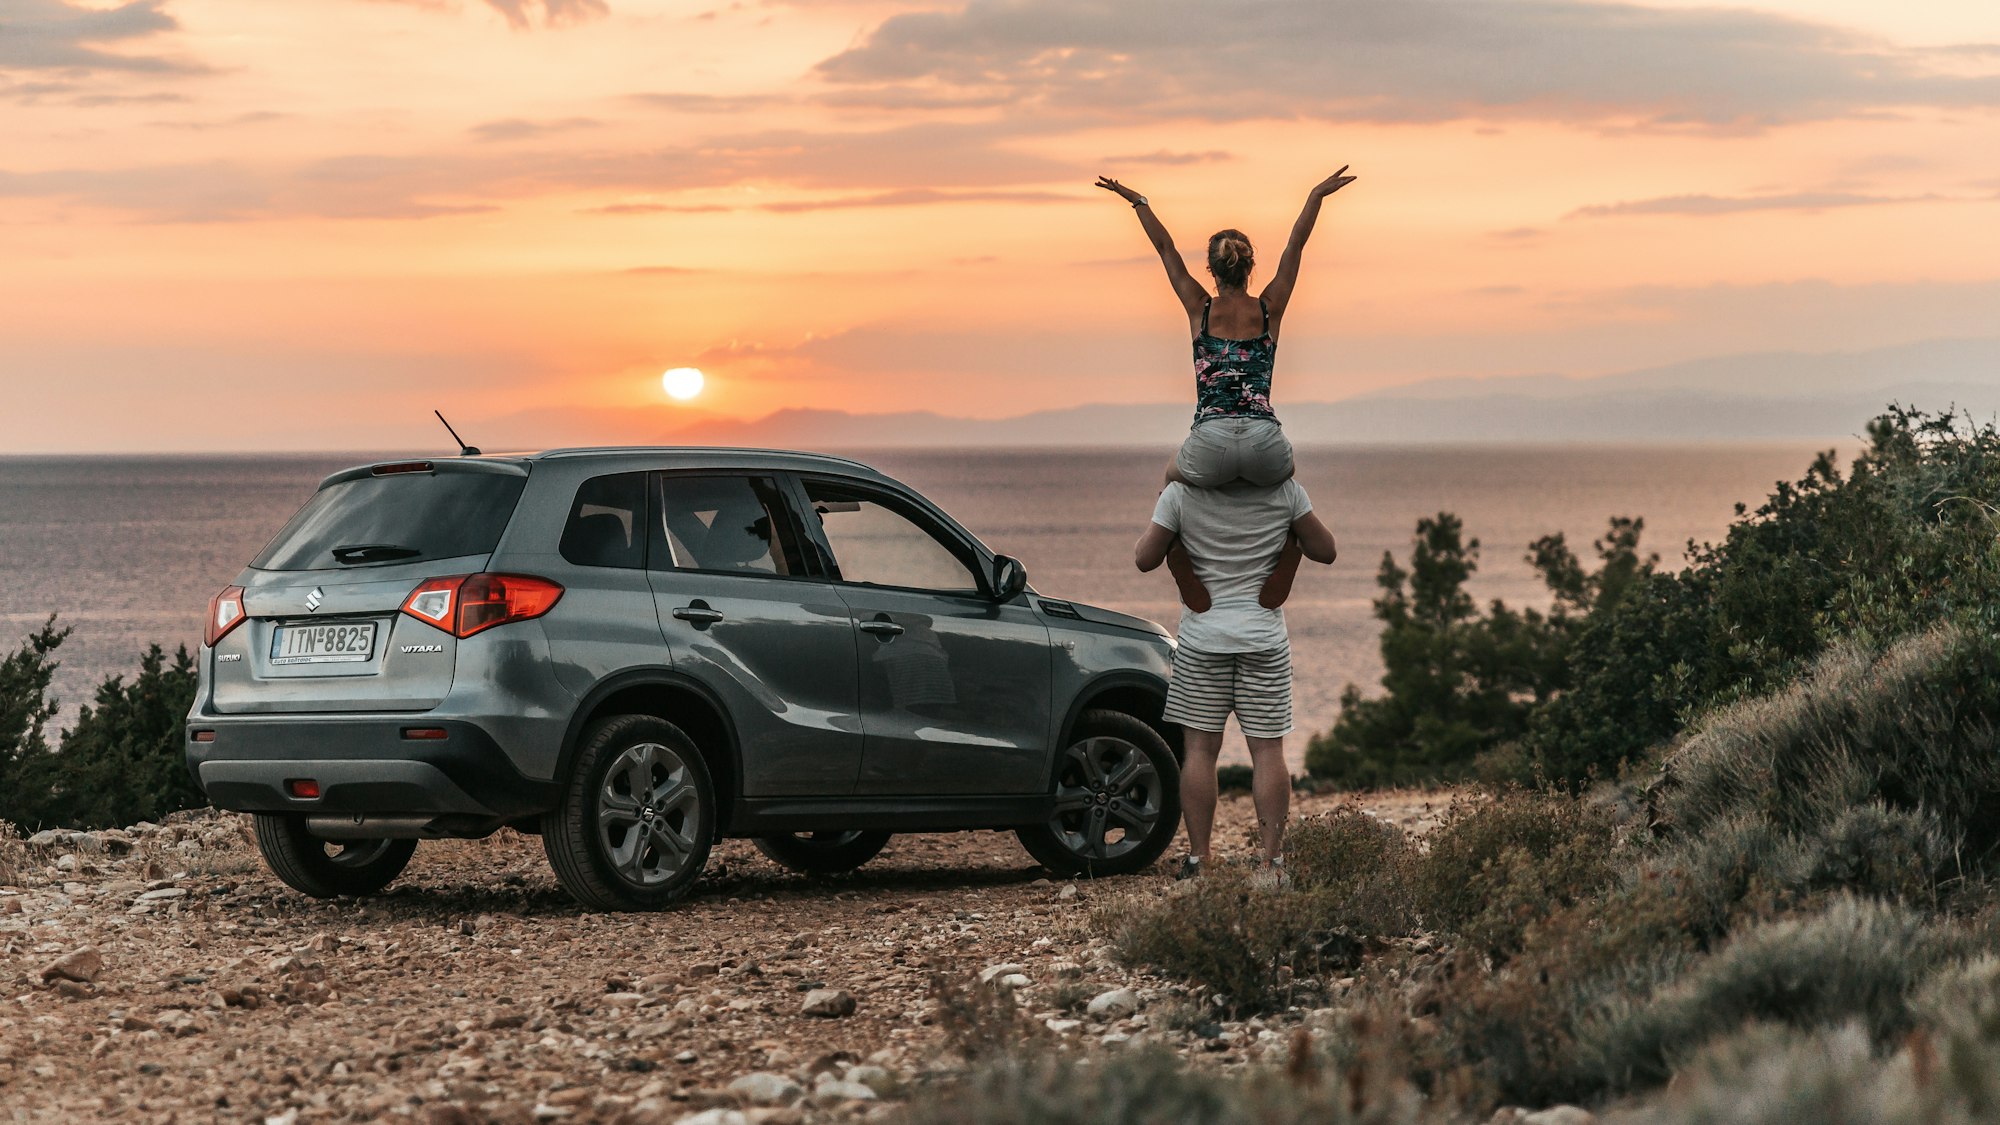 Suzuki Vitara, Exploring Greece off road and enjoying some epic sunsets. Couple time. Couple goals. Couple adventures.